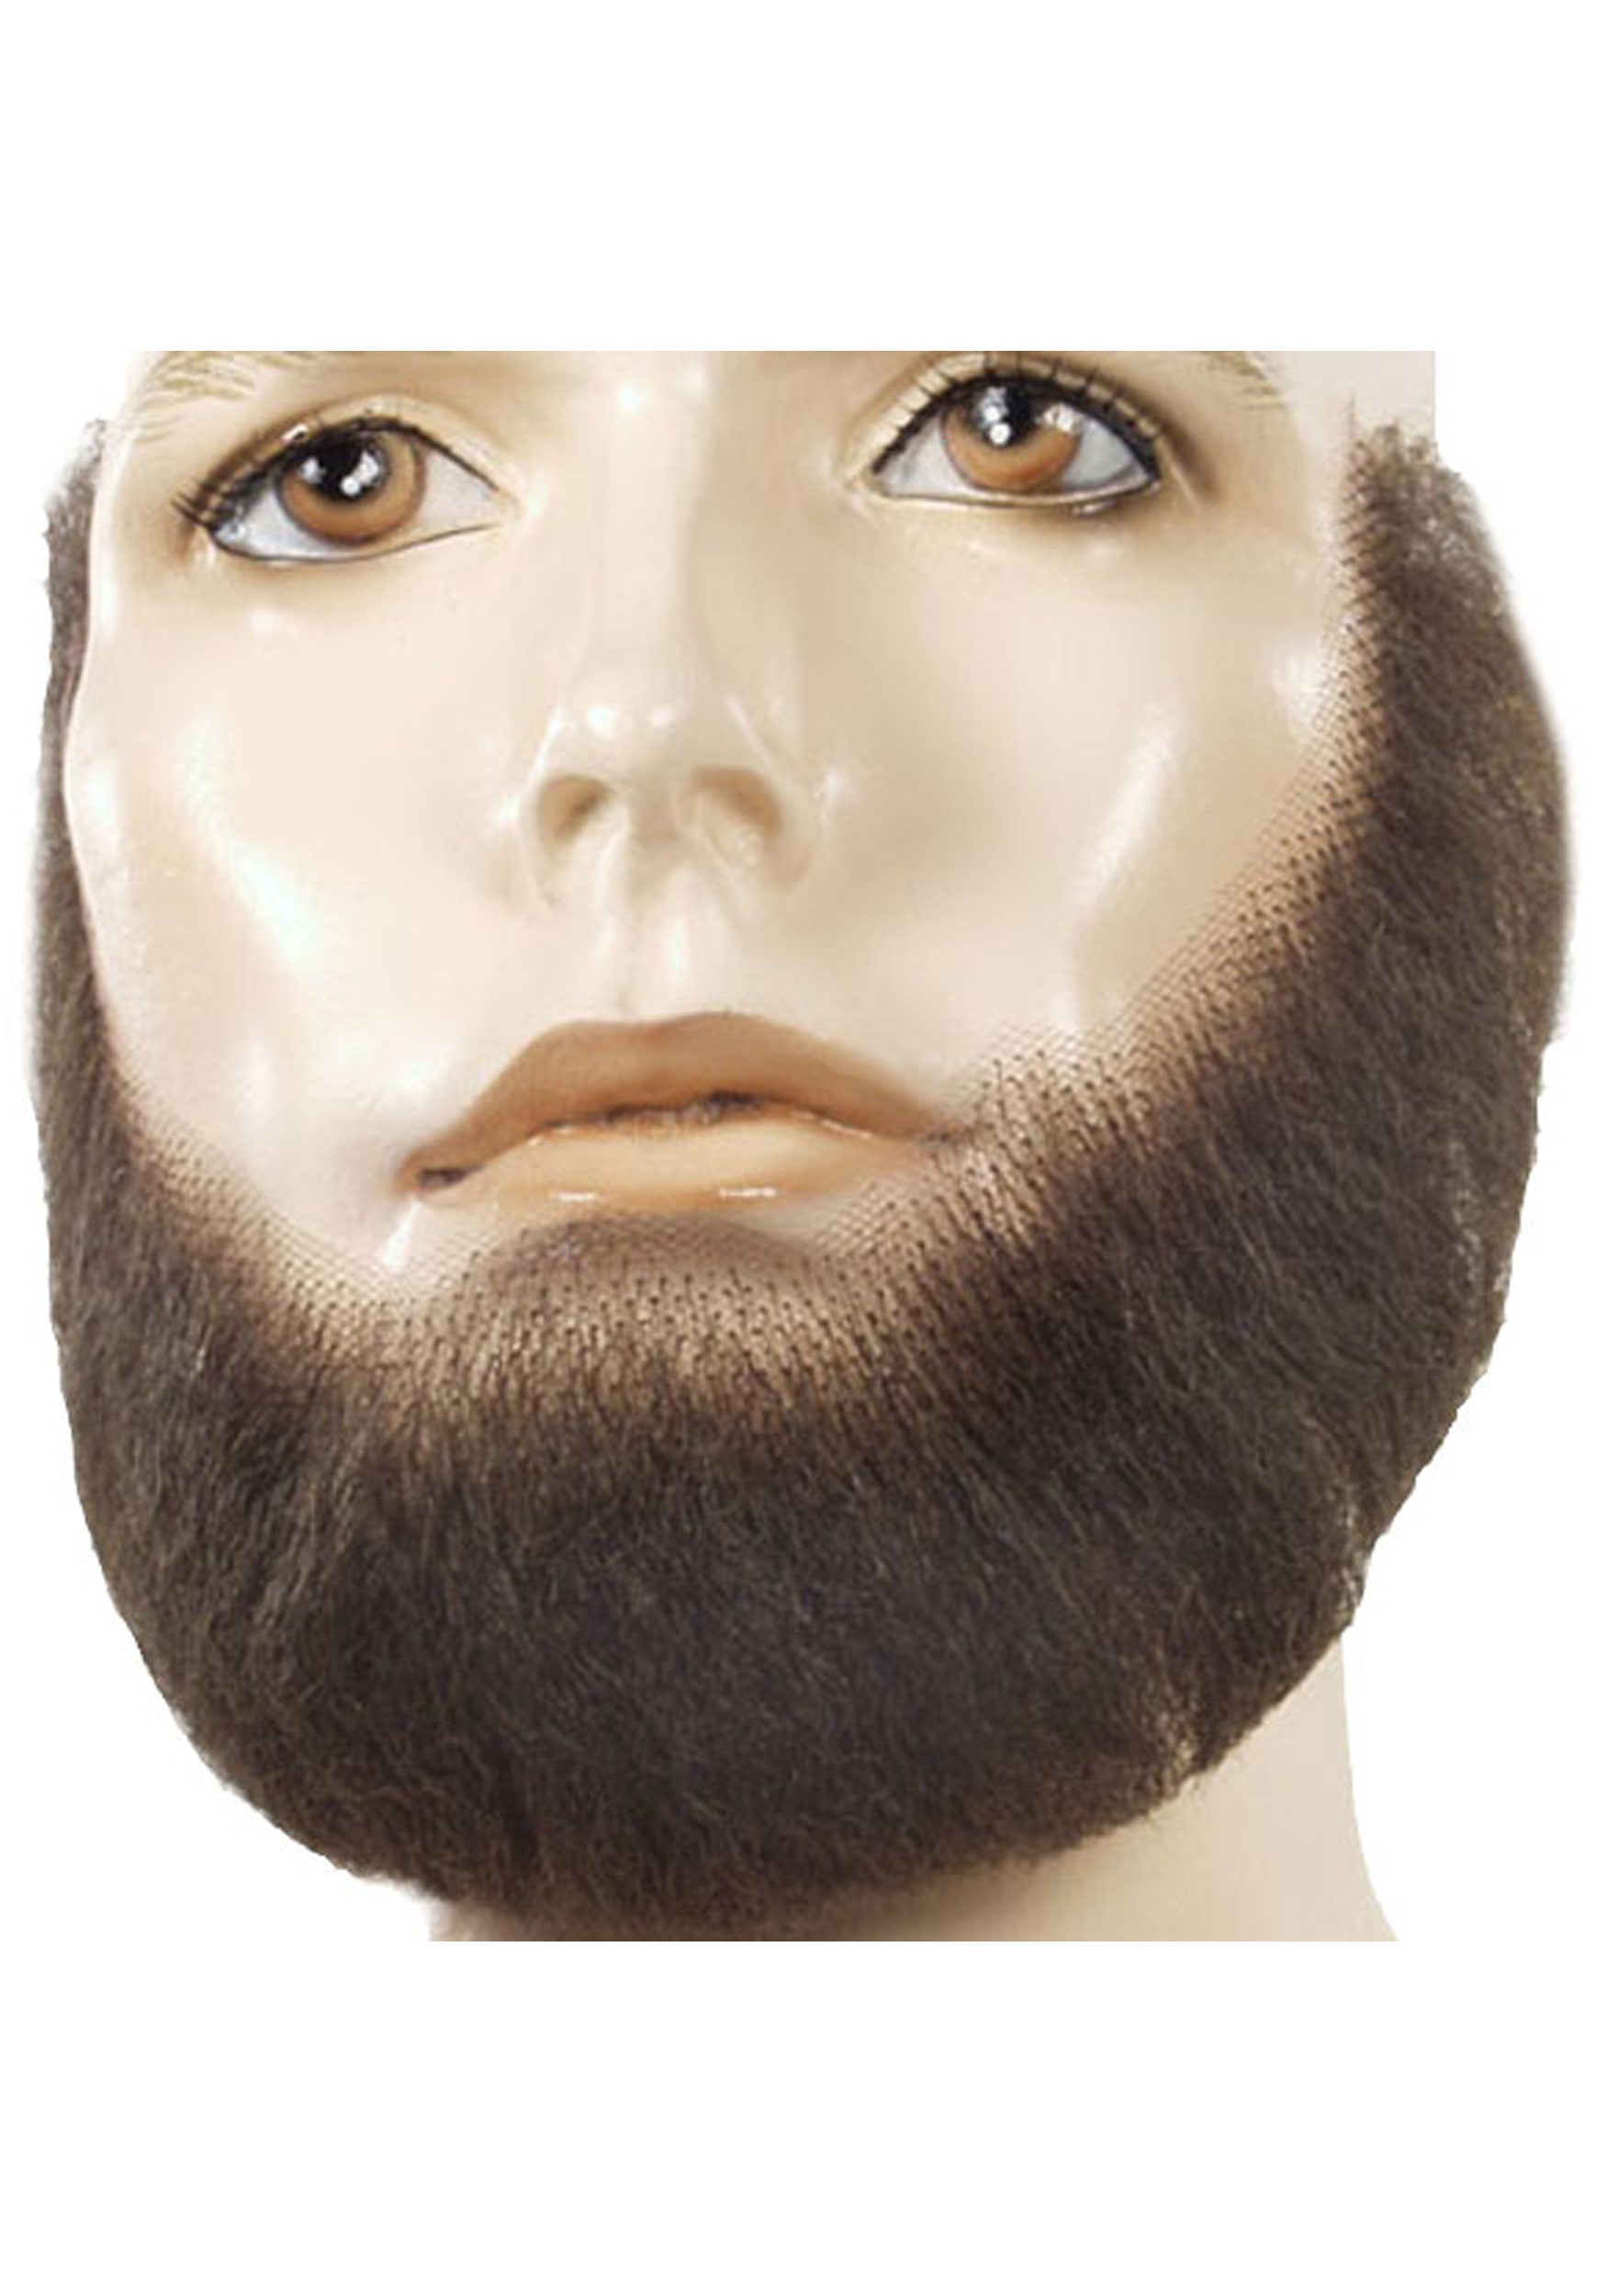 HowTo Make A Fake Beard Fake Beards, Fake Beard Diy, Diy Beard Fake